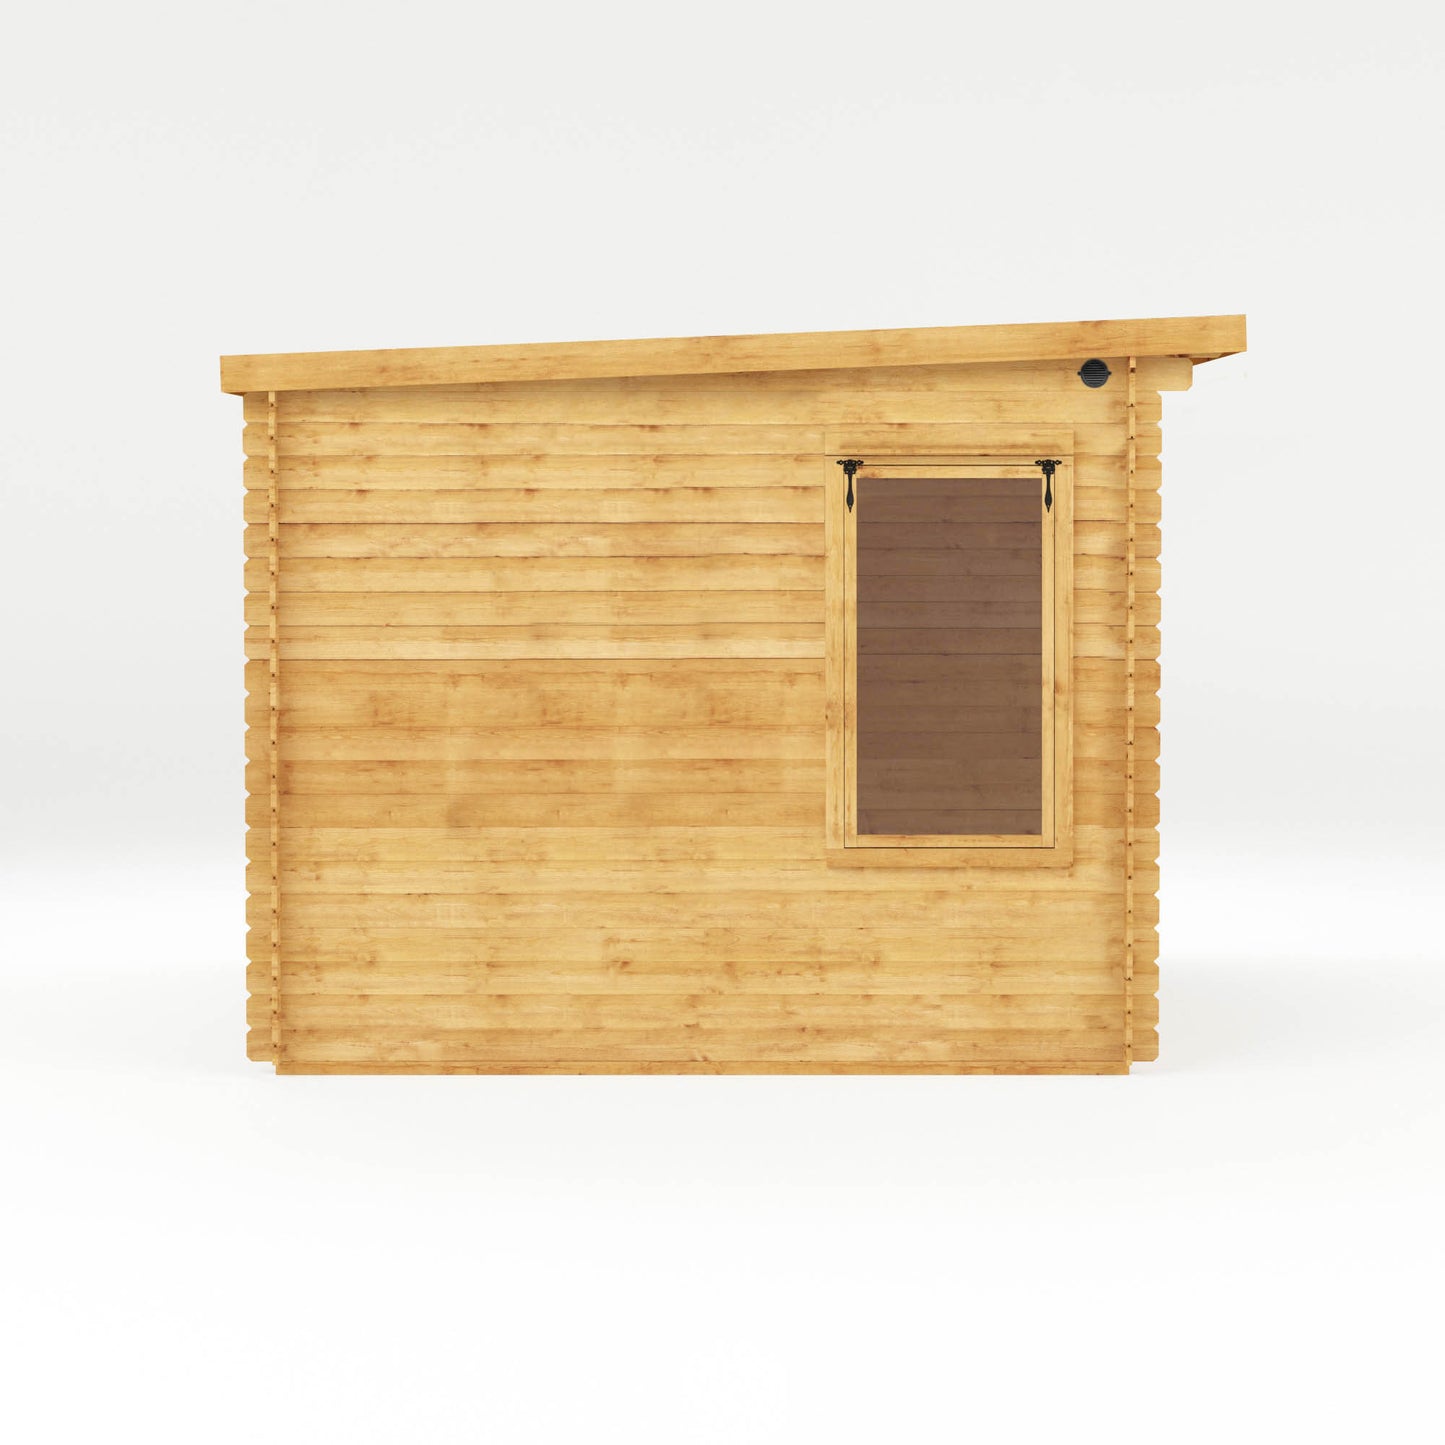 3m x 3m Pent Log Cabin